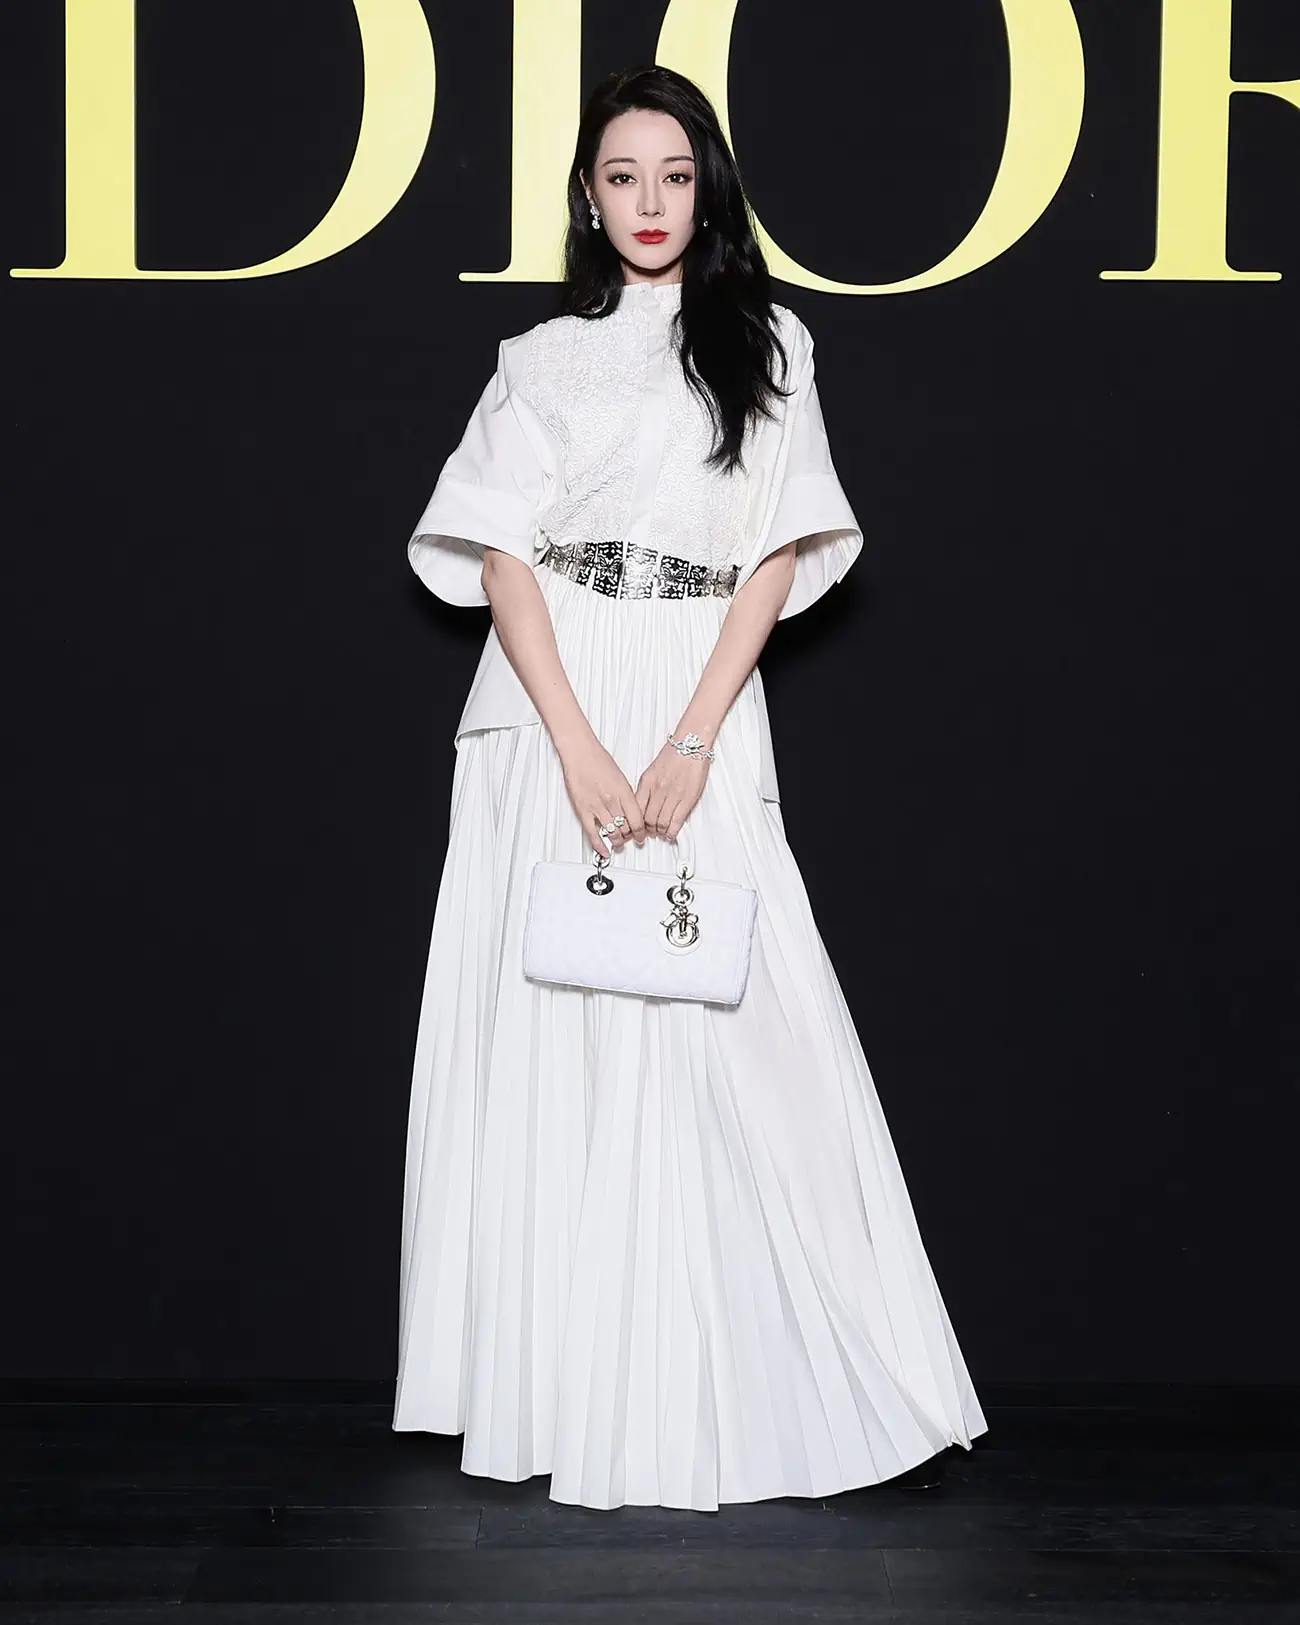 Rachel Zegler and Dilraba Dilmurat enchant as Dior's newest ambassadors